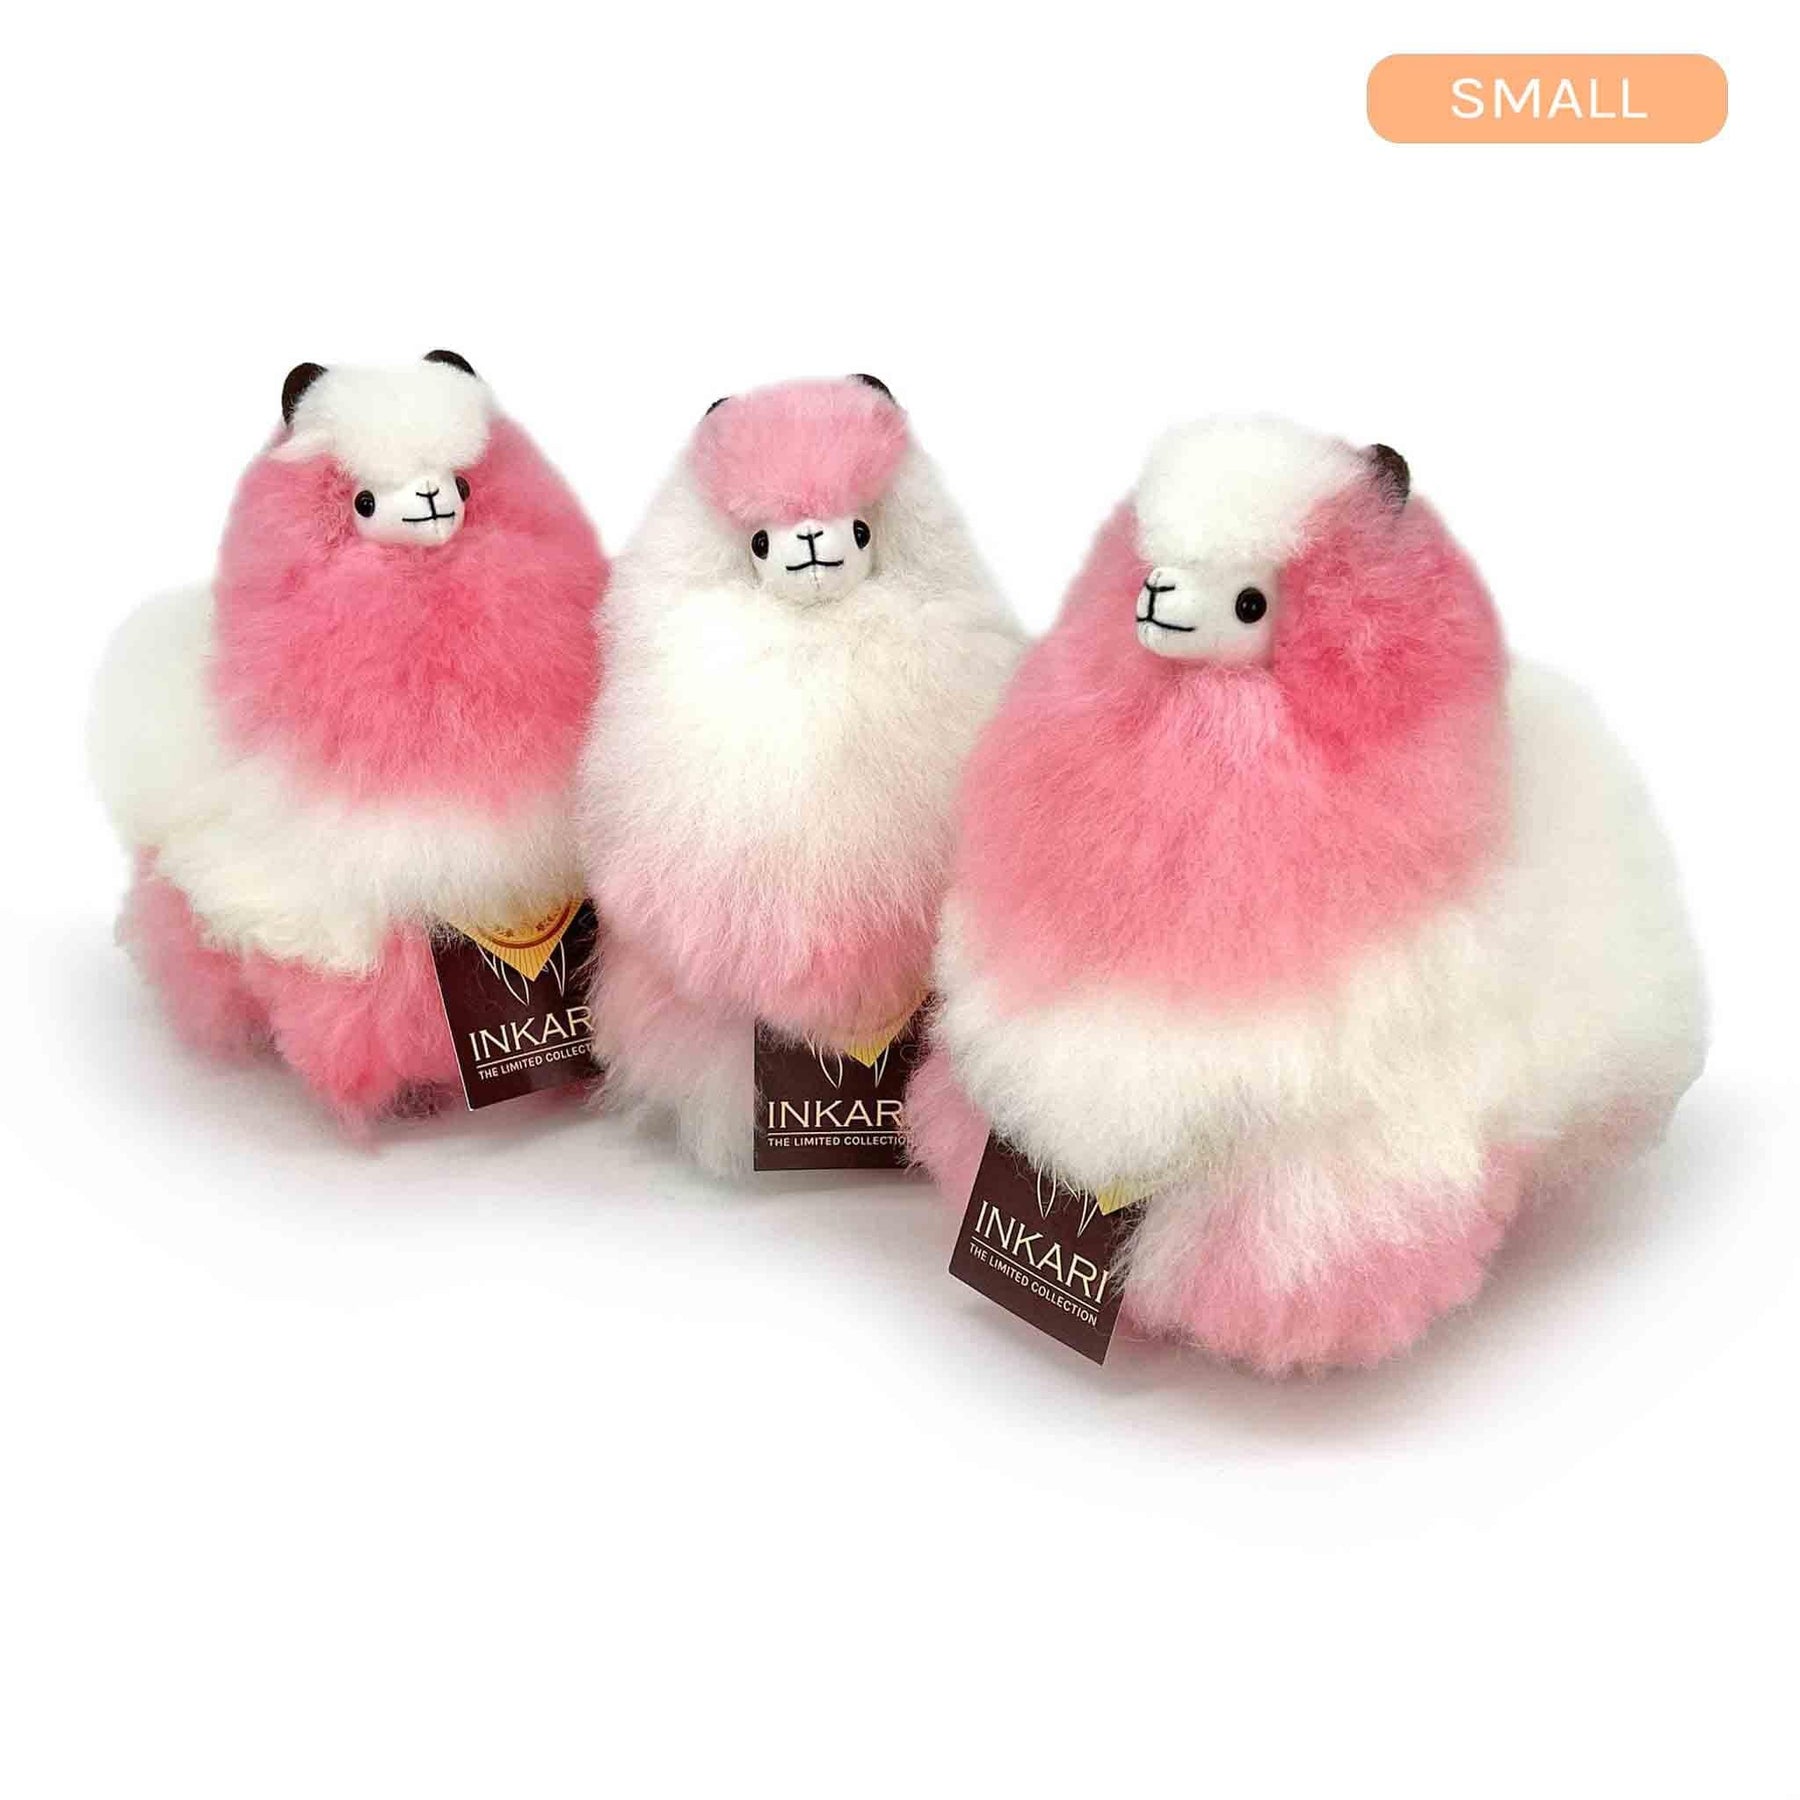 Pink Crocus - Small Alpaca Toy (23cm) -Limited Edition